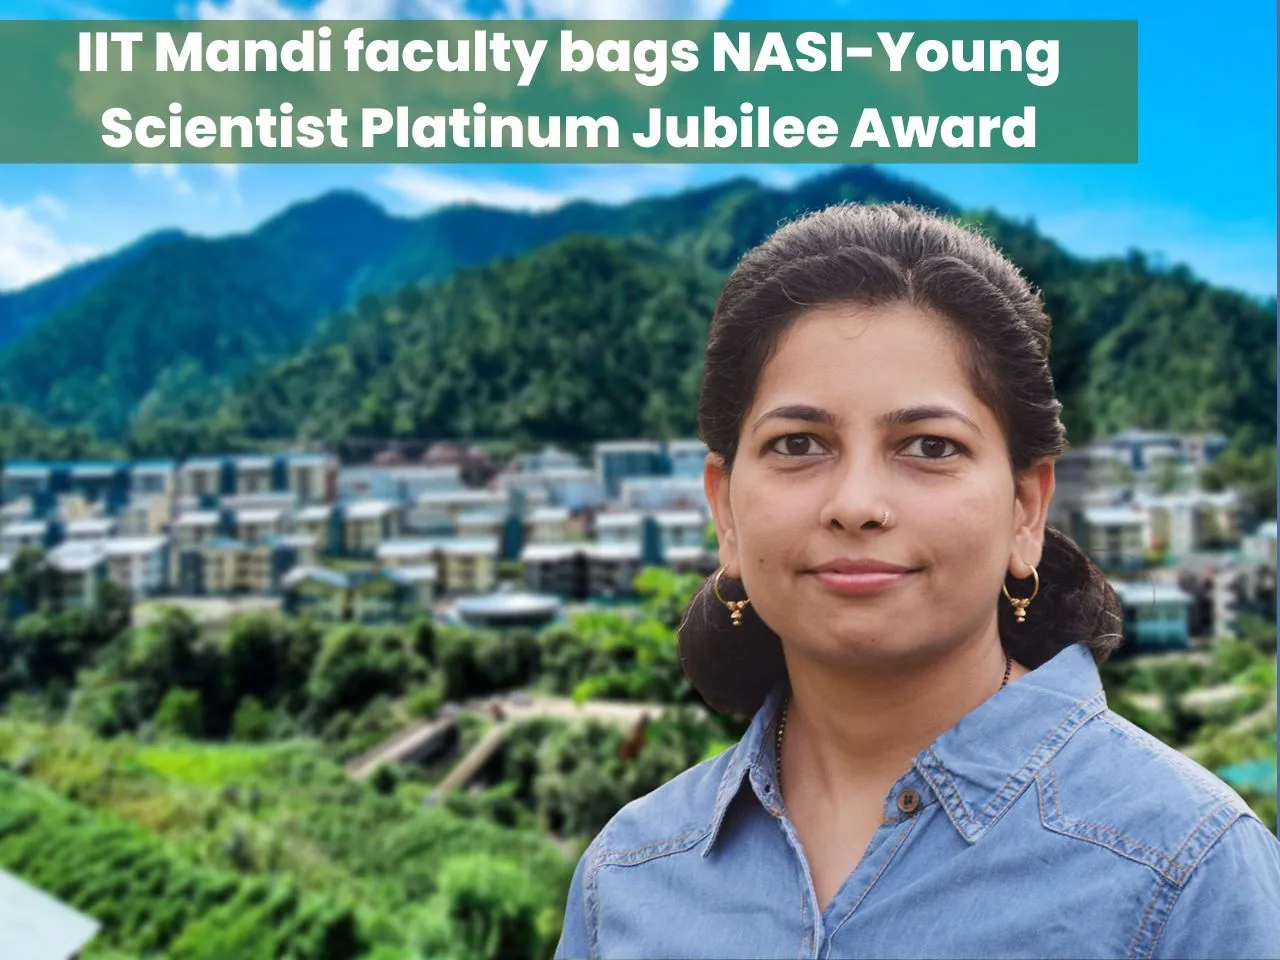 IIT Mandi faculty bags NASI-Young Scientist Award